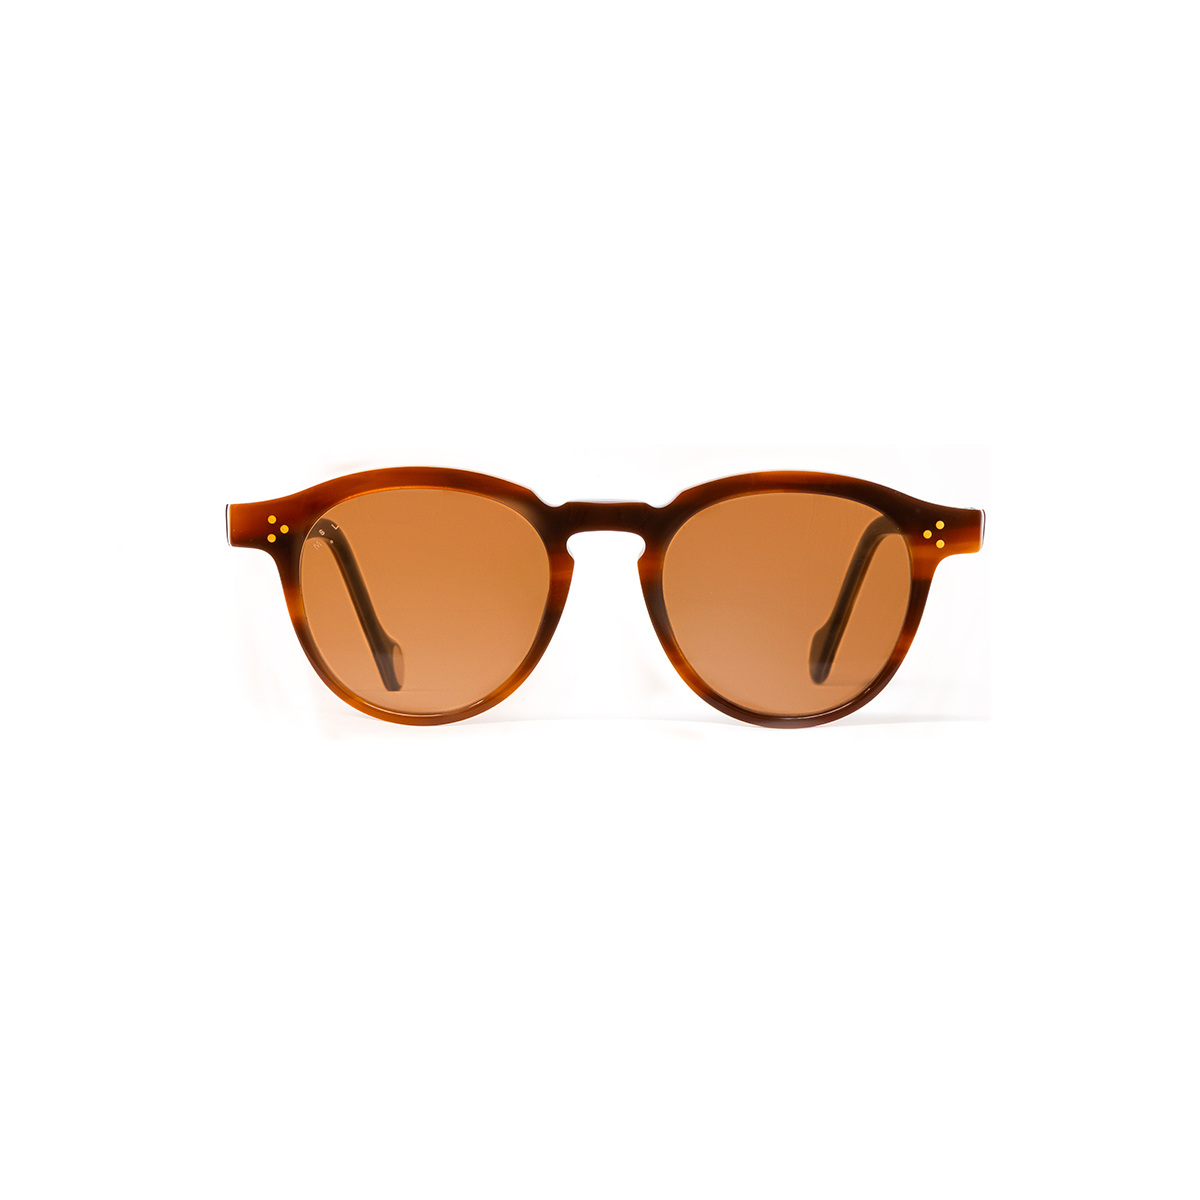 Sunglasses Max, Scale / Blue - Size 48-20 - Organic acetate - image 1